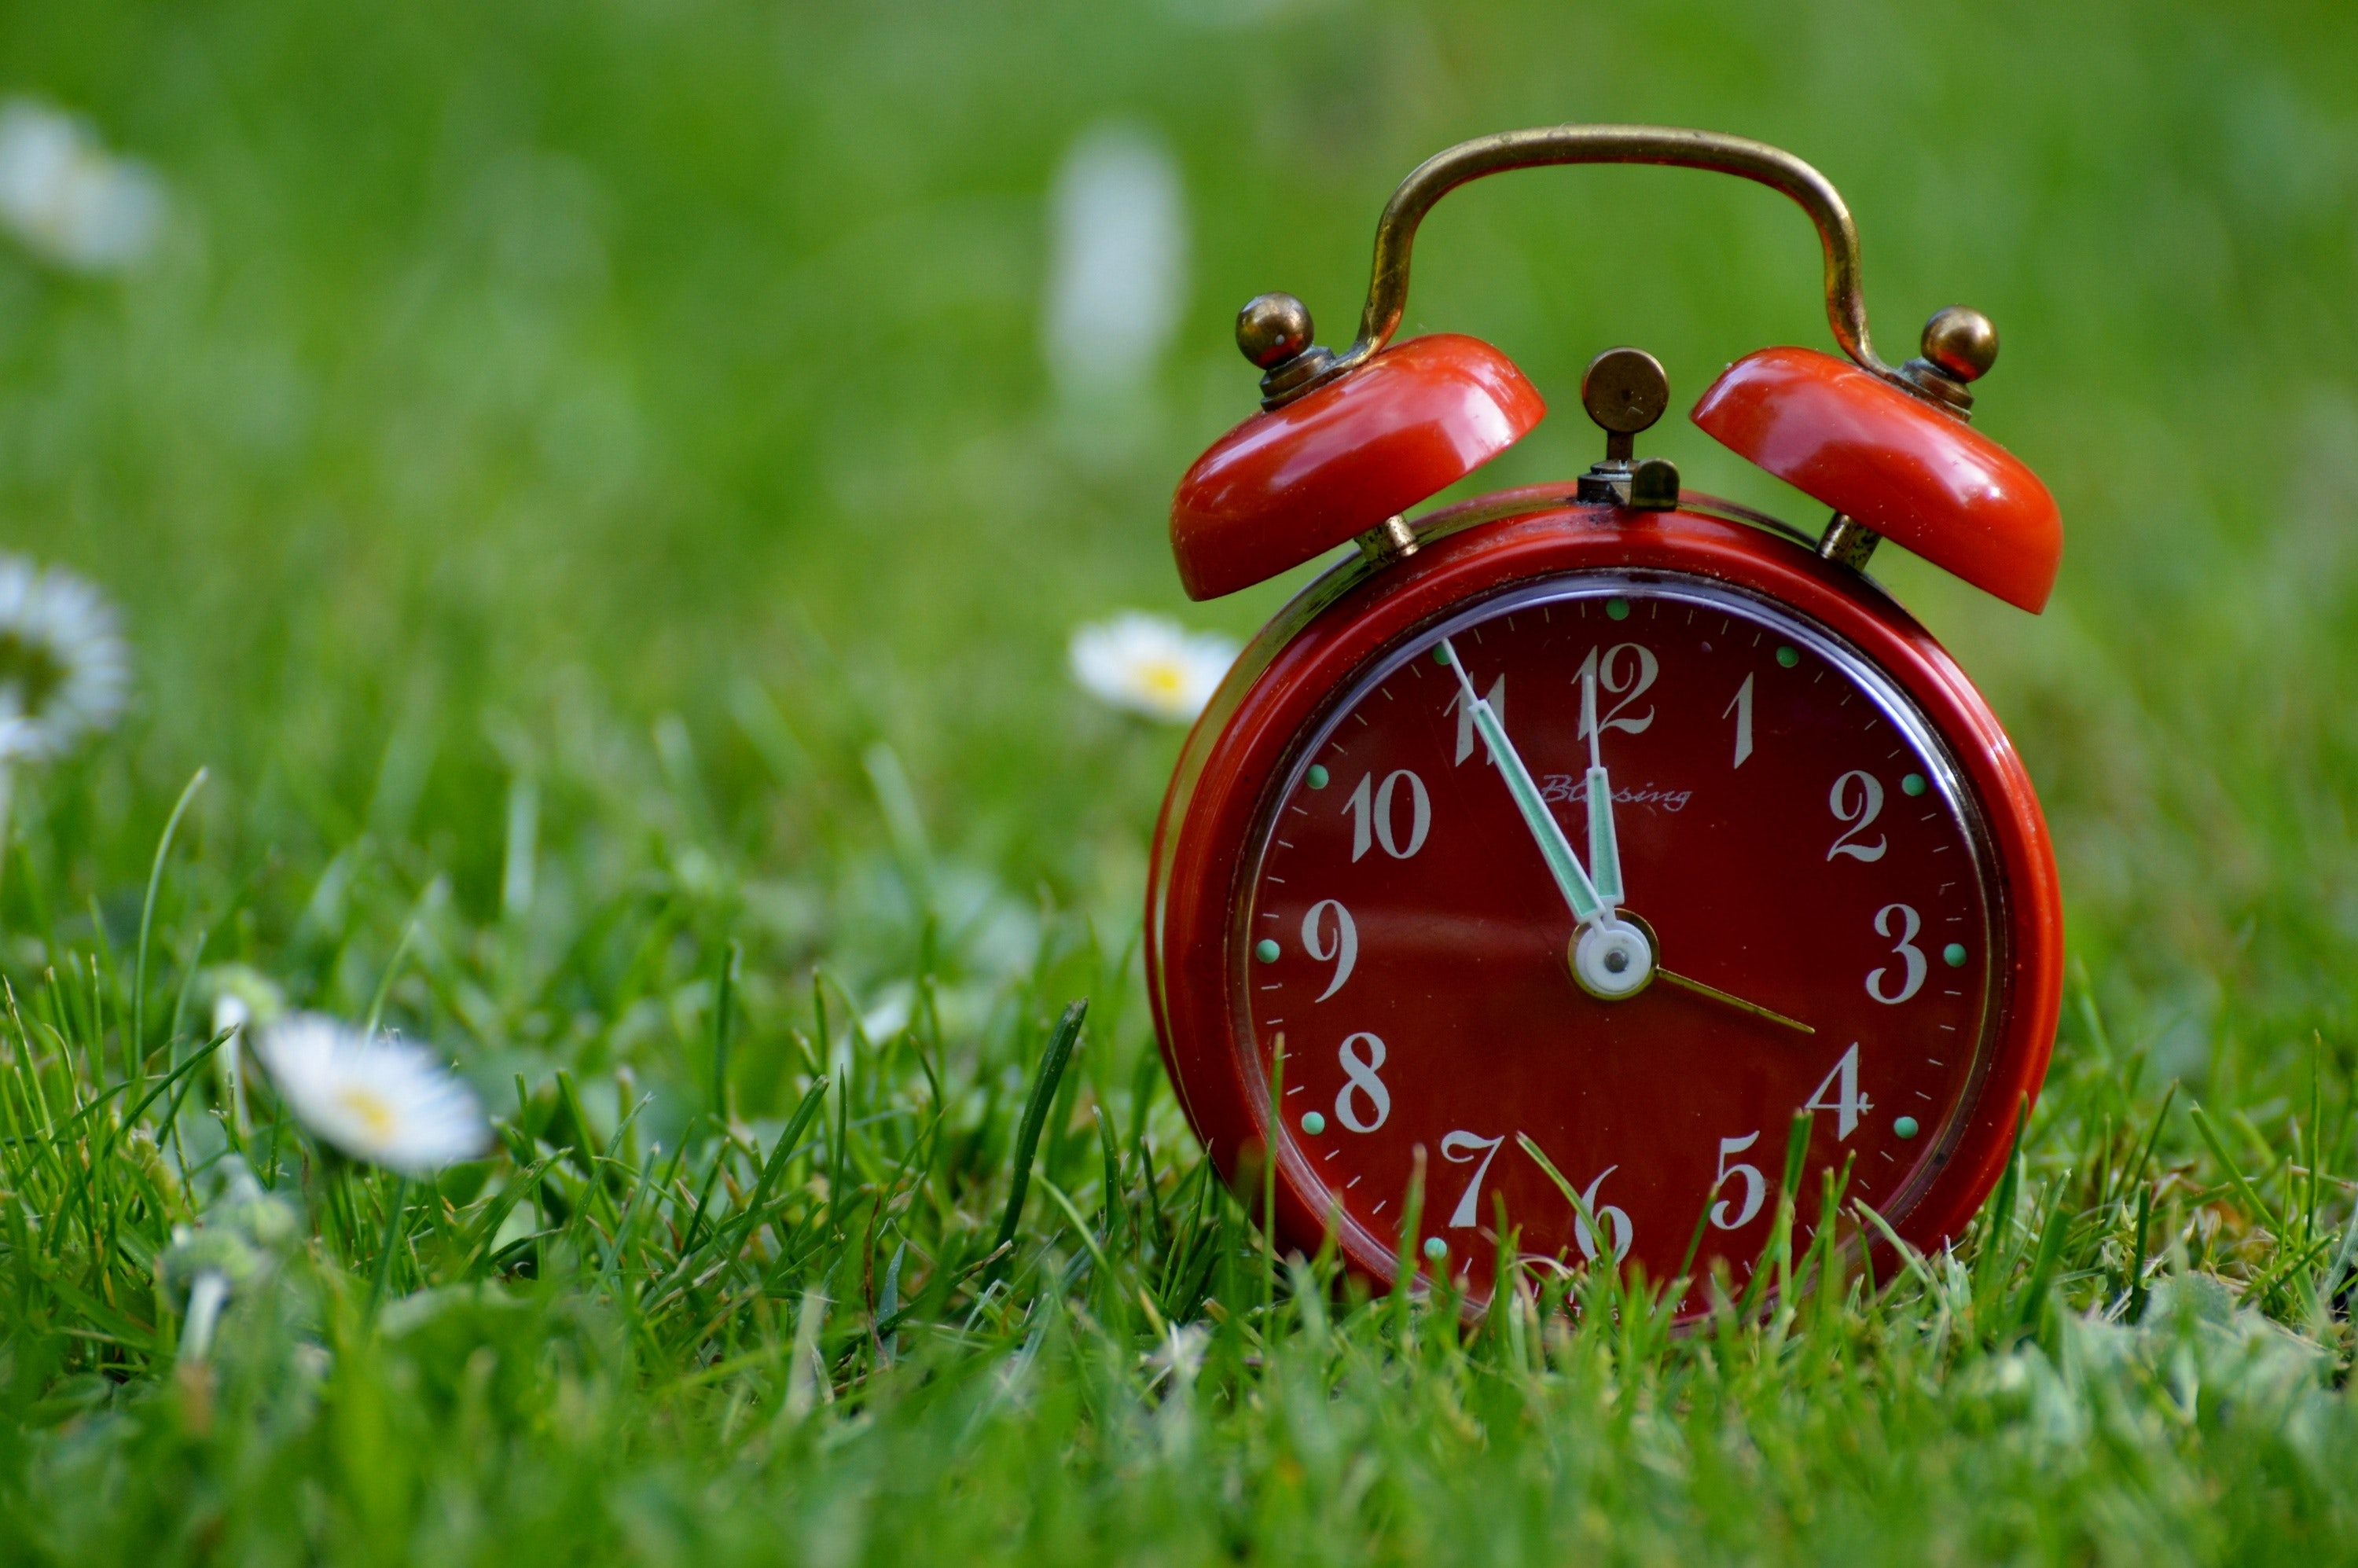 Red 2 Bell Alarm Clock On Grass Field · Free